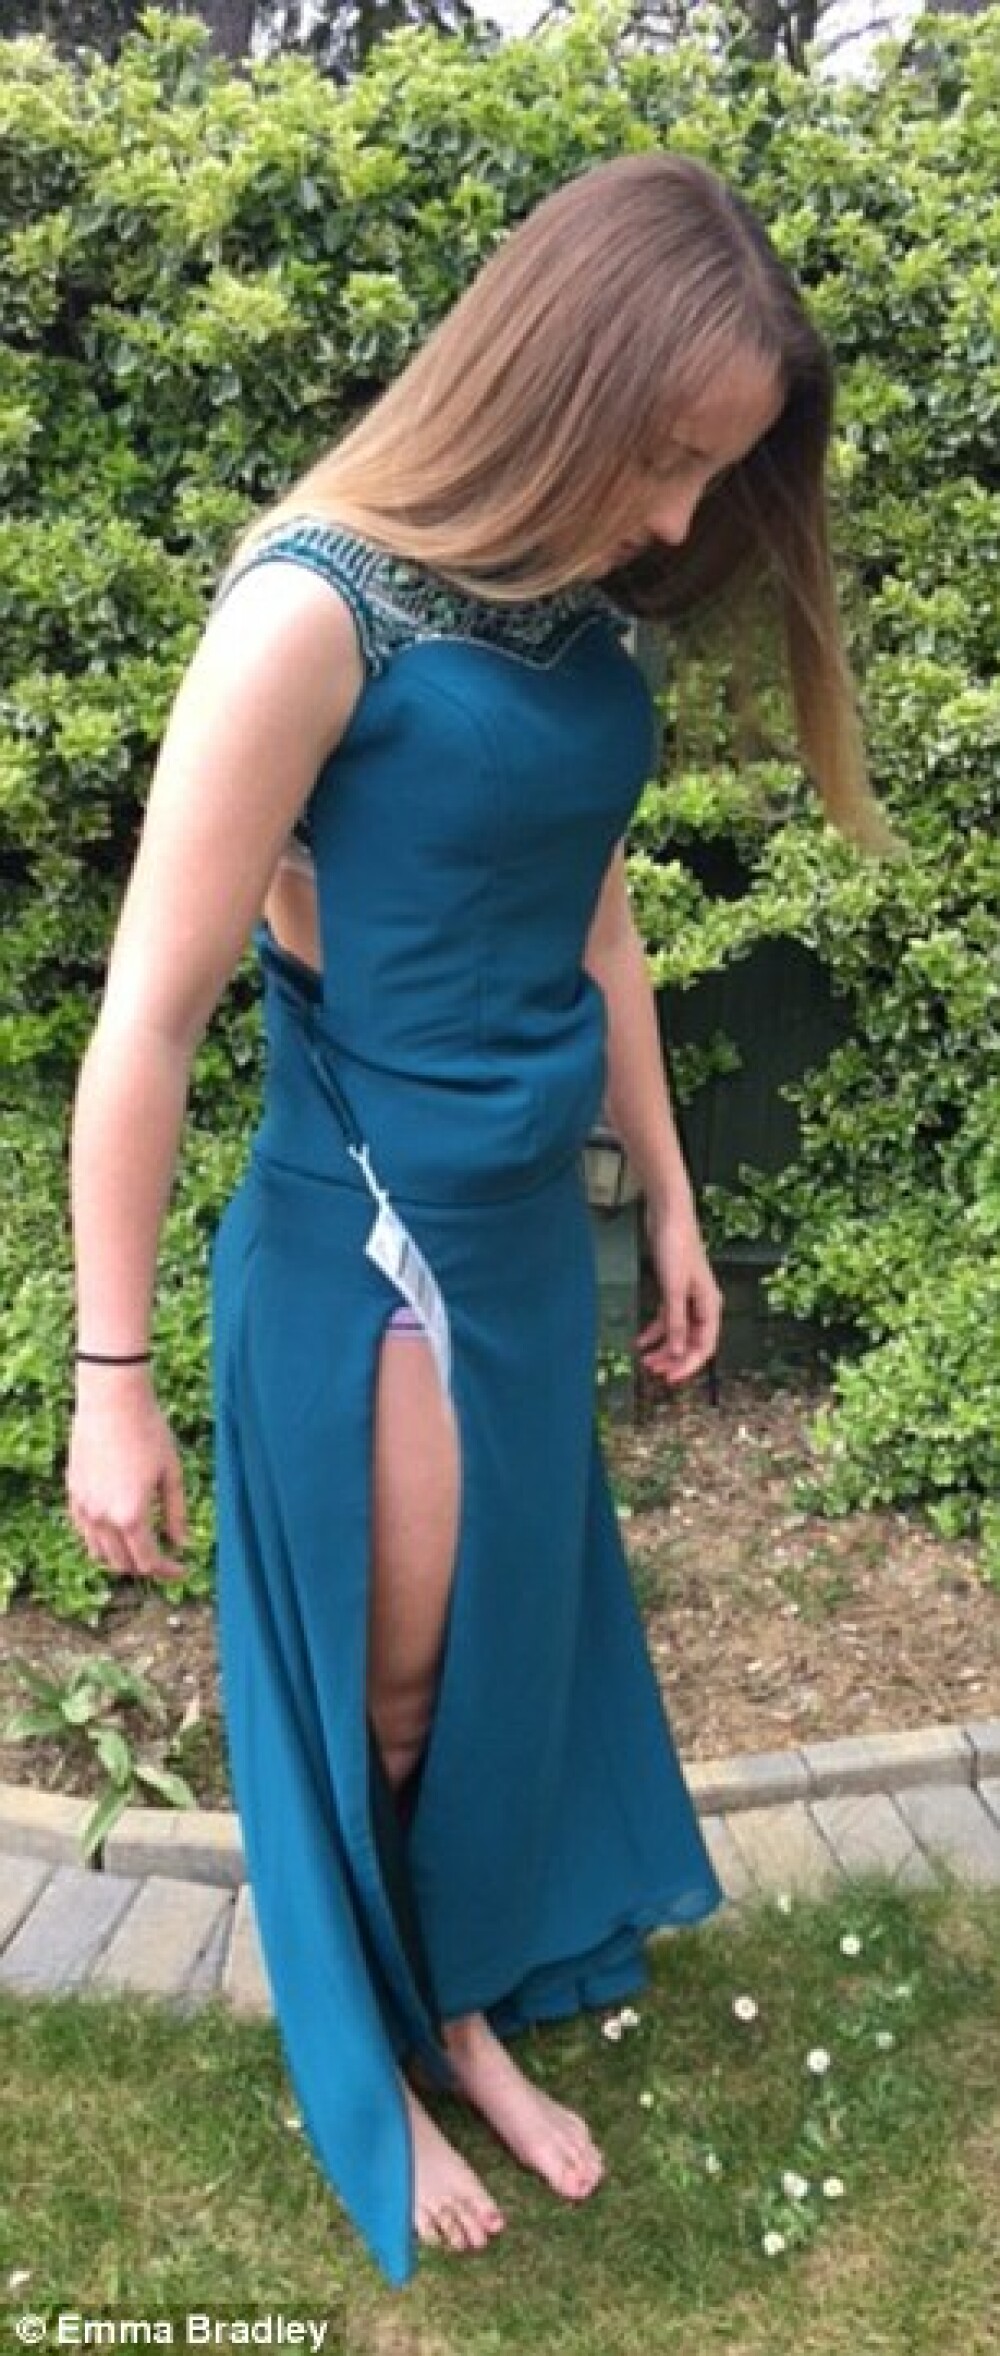 A comandat online rochia pentru balul de absolvire si a avut o surpriza cand a primit-o acasa. Ce a gasit in colet. FOTO - Imaginea 4